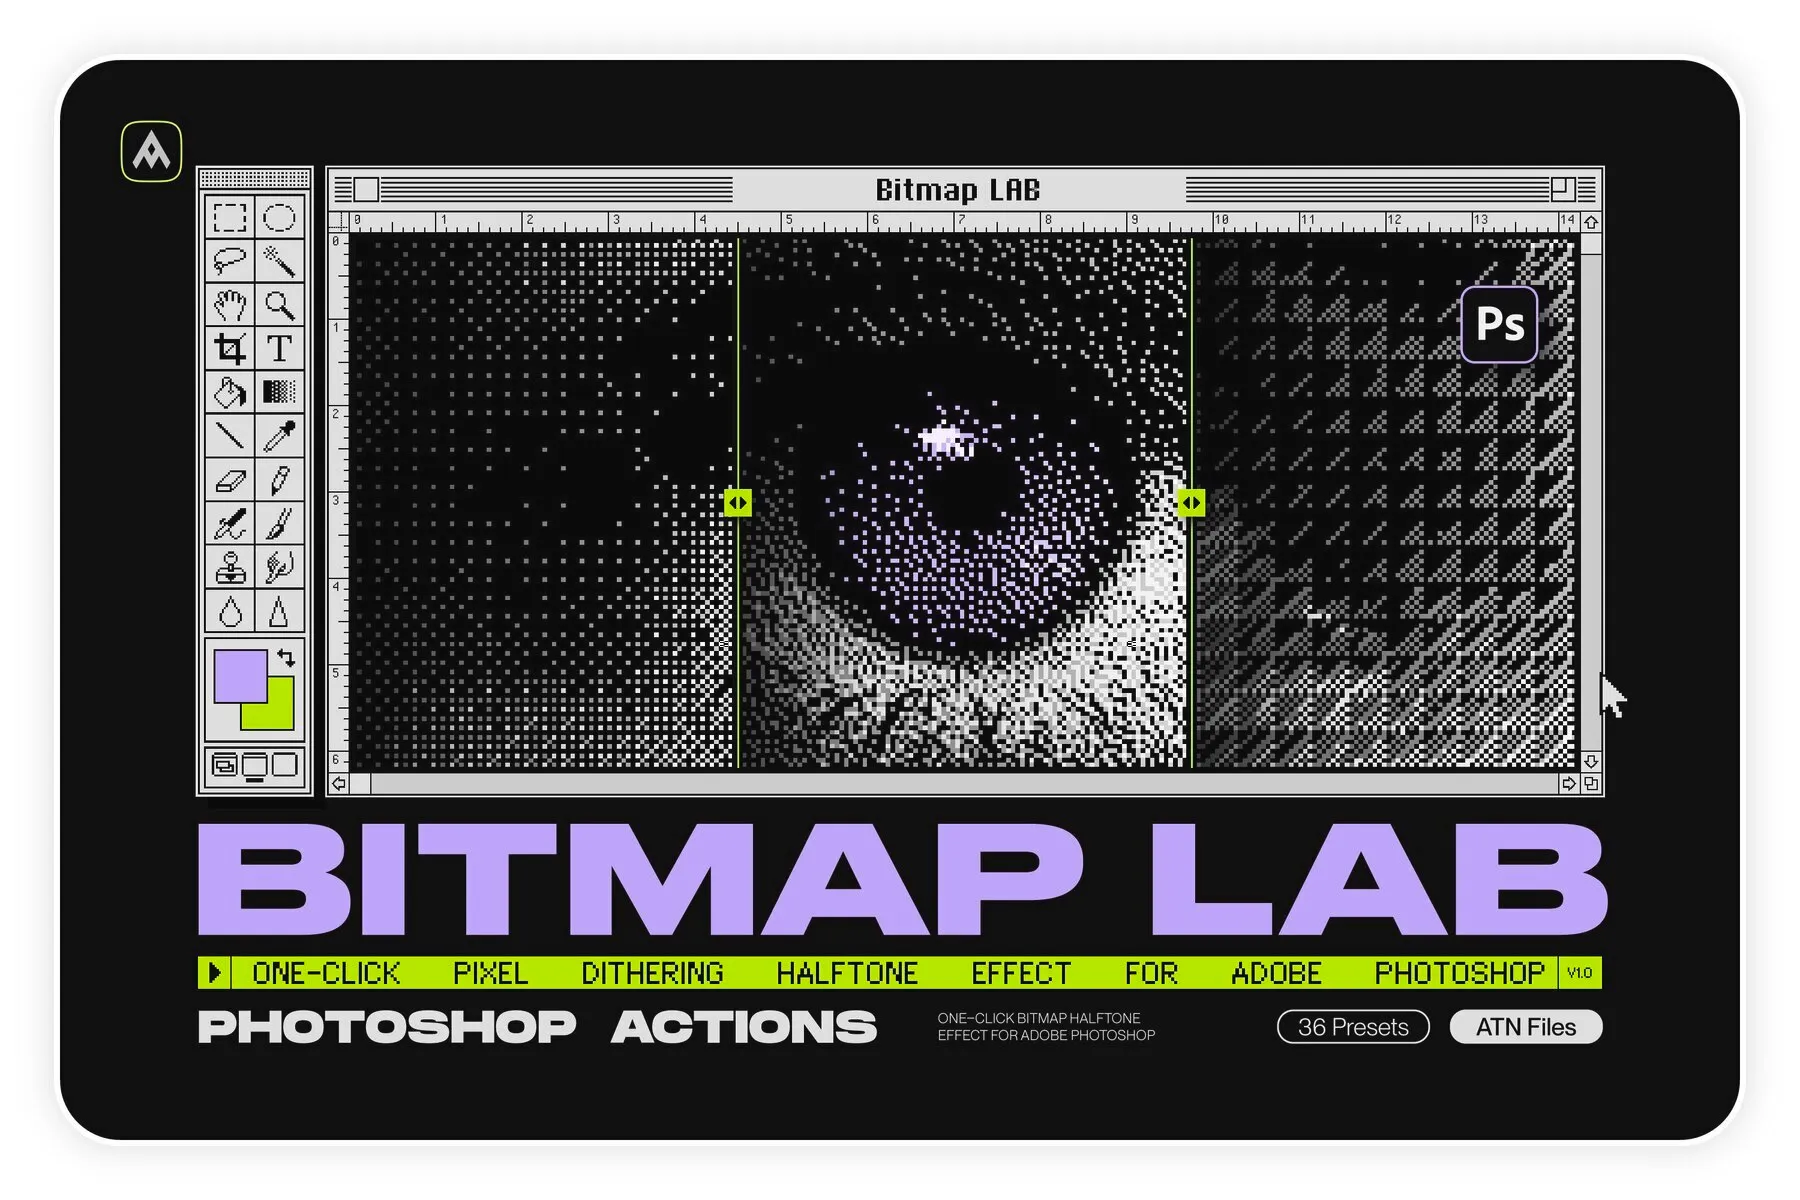 Bitmap LAB – one-click pixel halftone Photoshop action